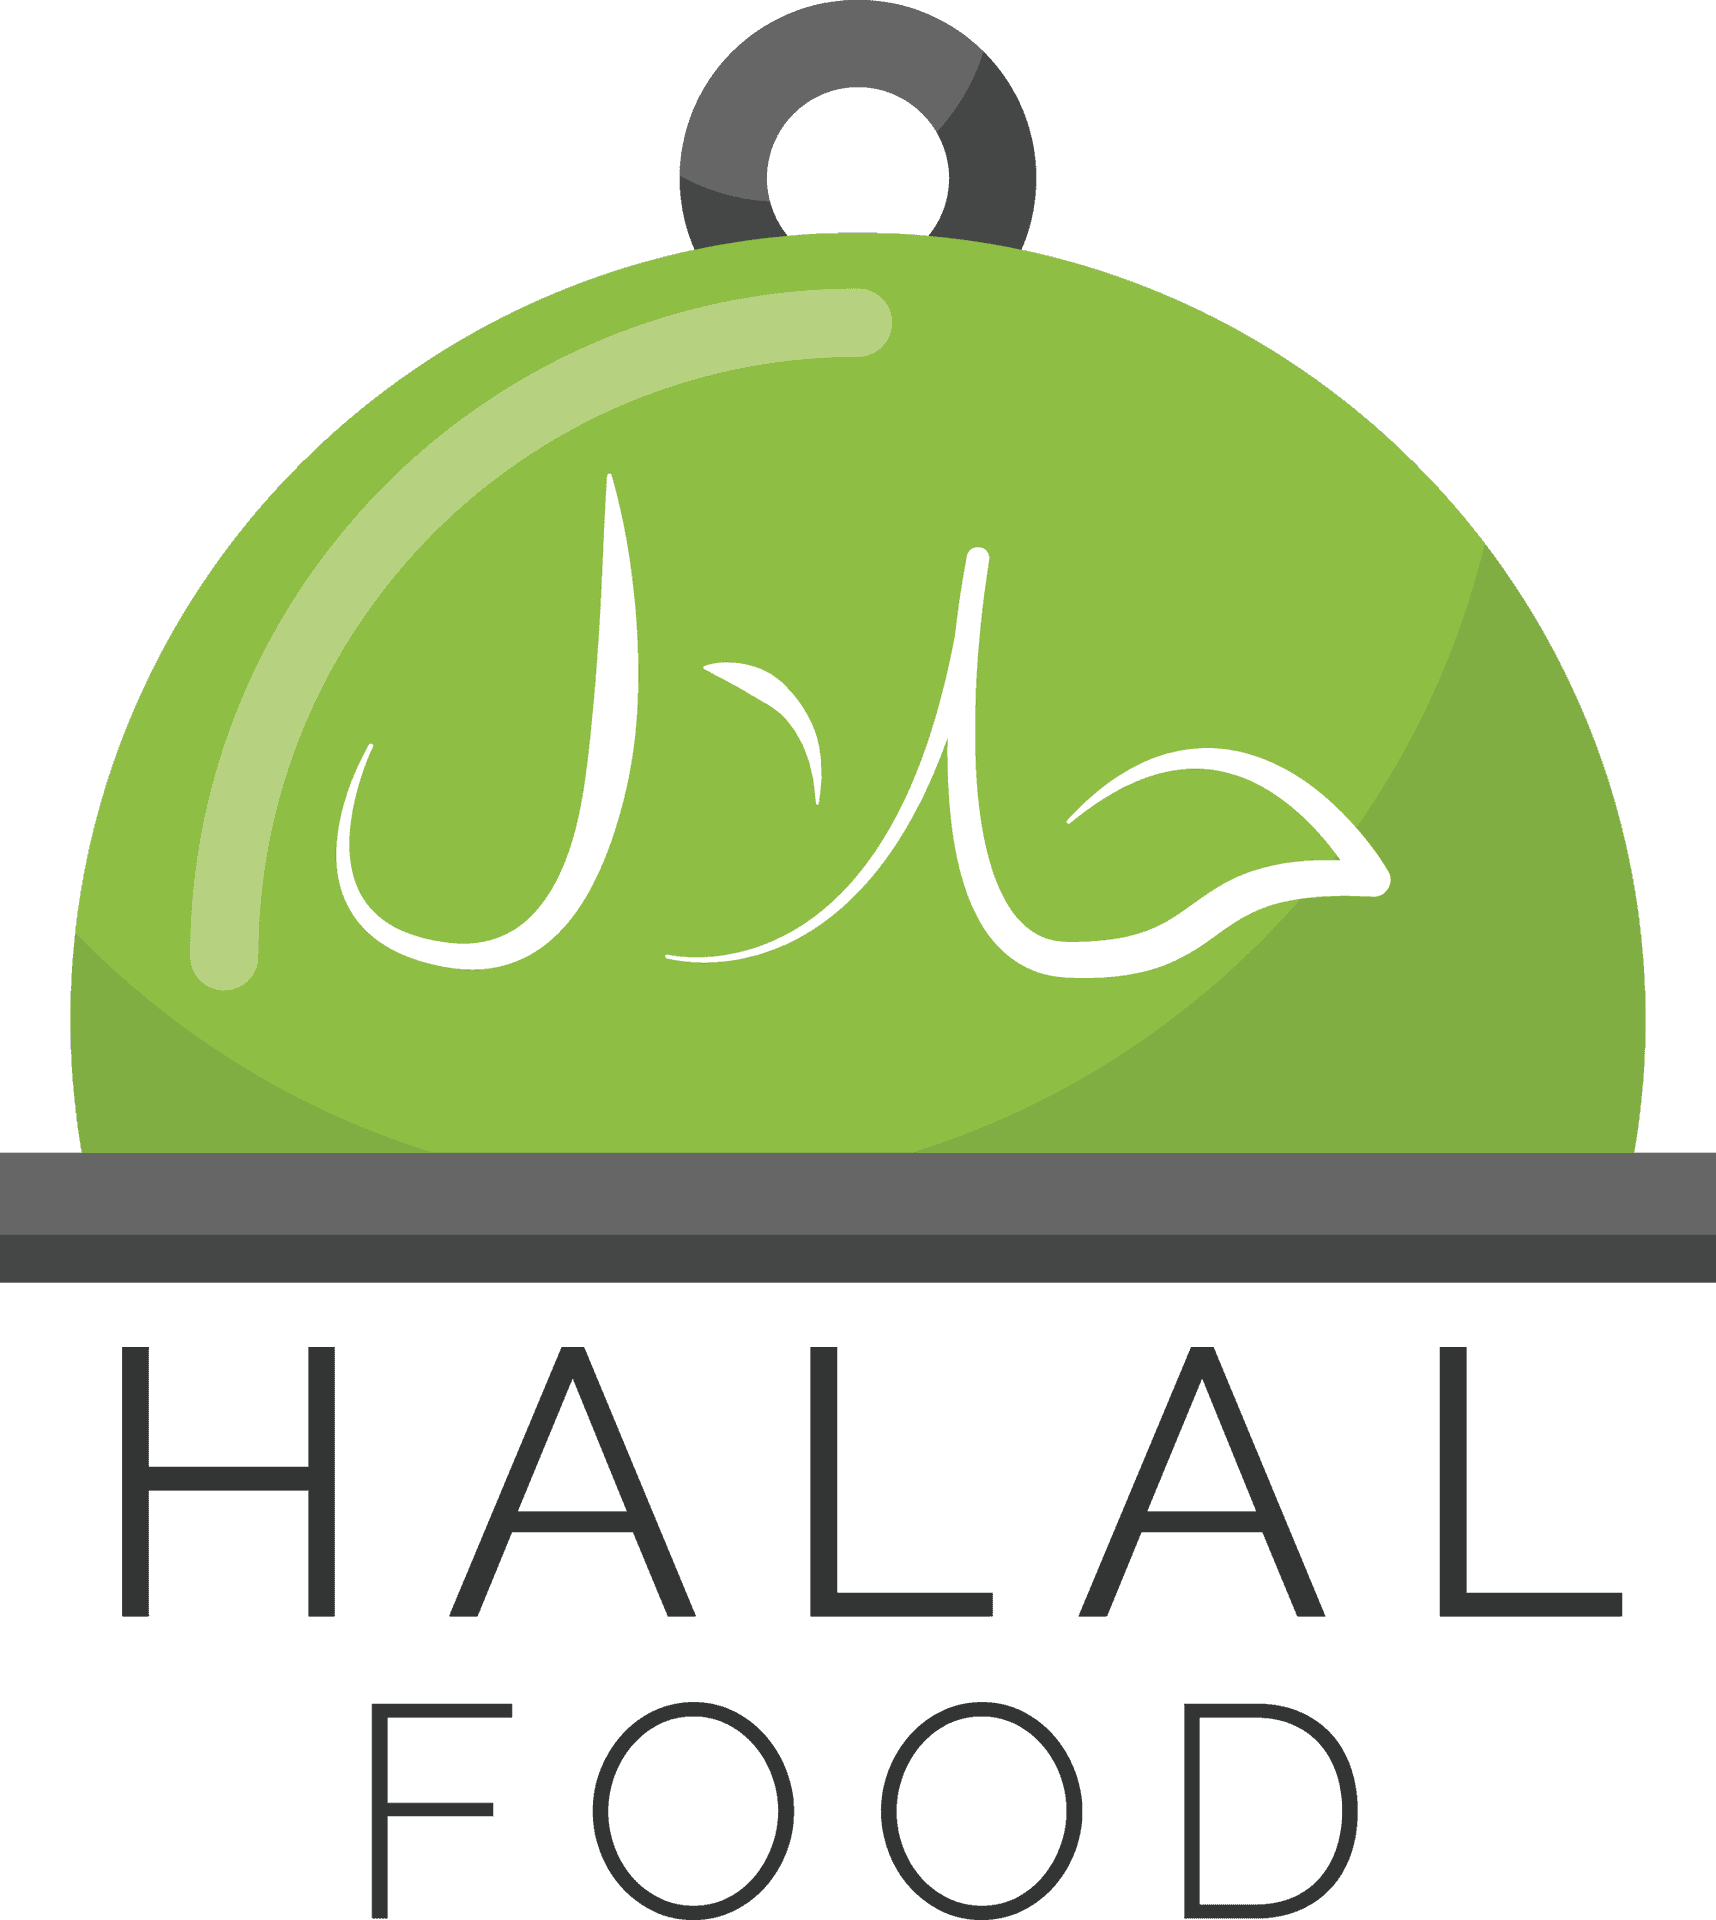 Download Halal Food Certification Symbol | Wallpapers.com